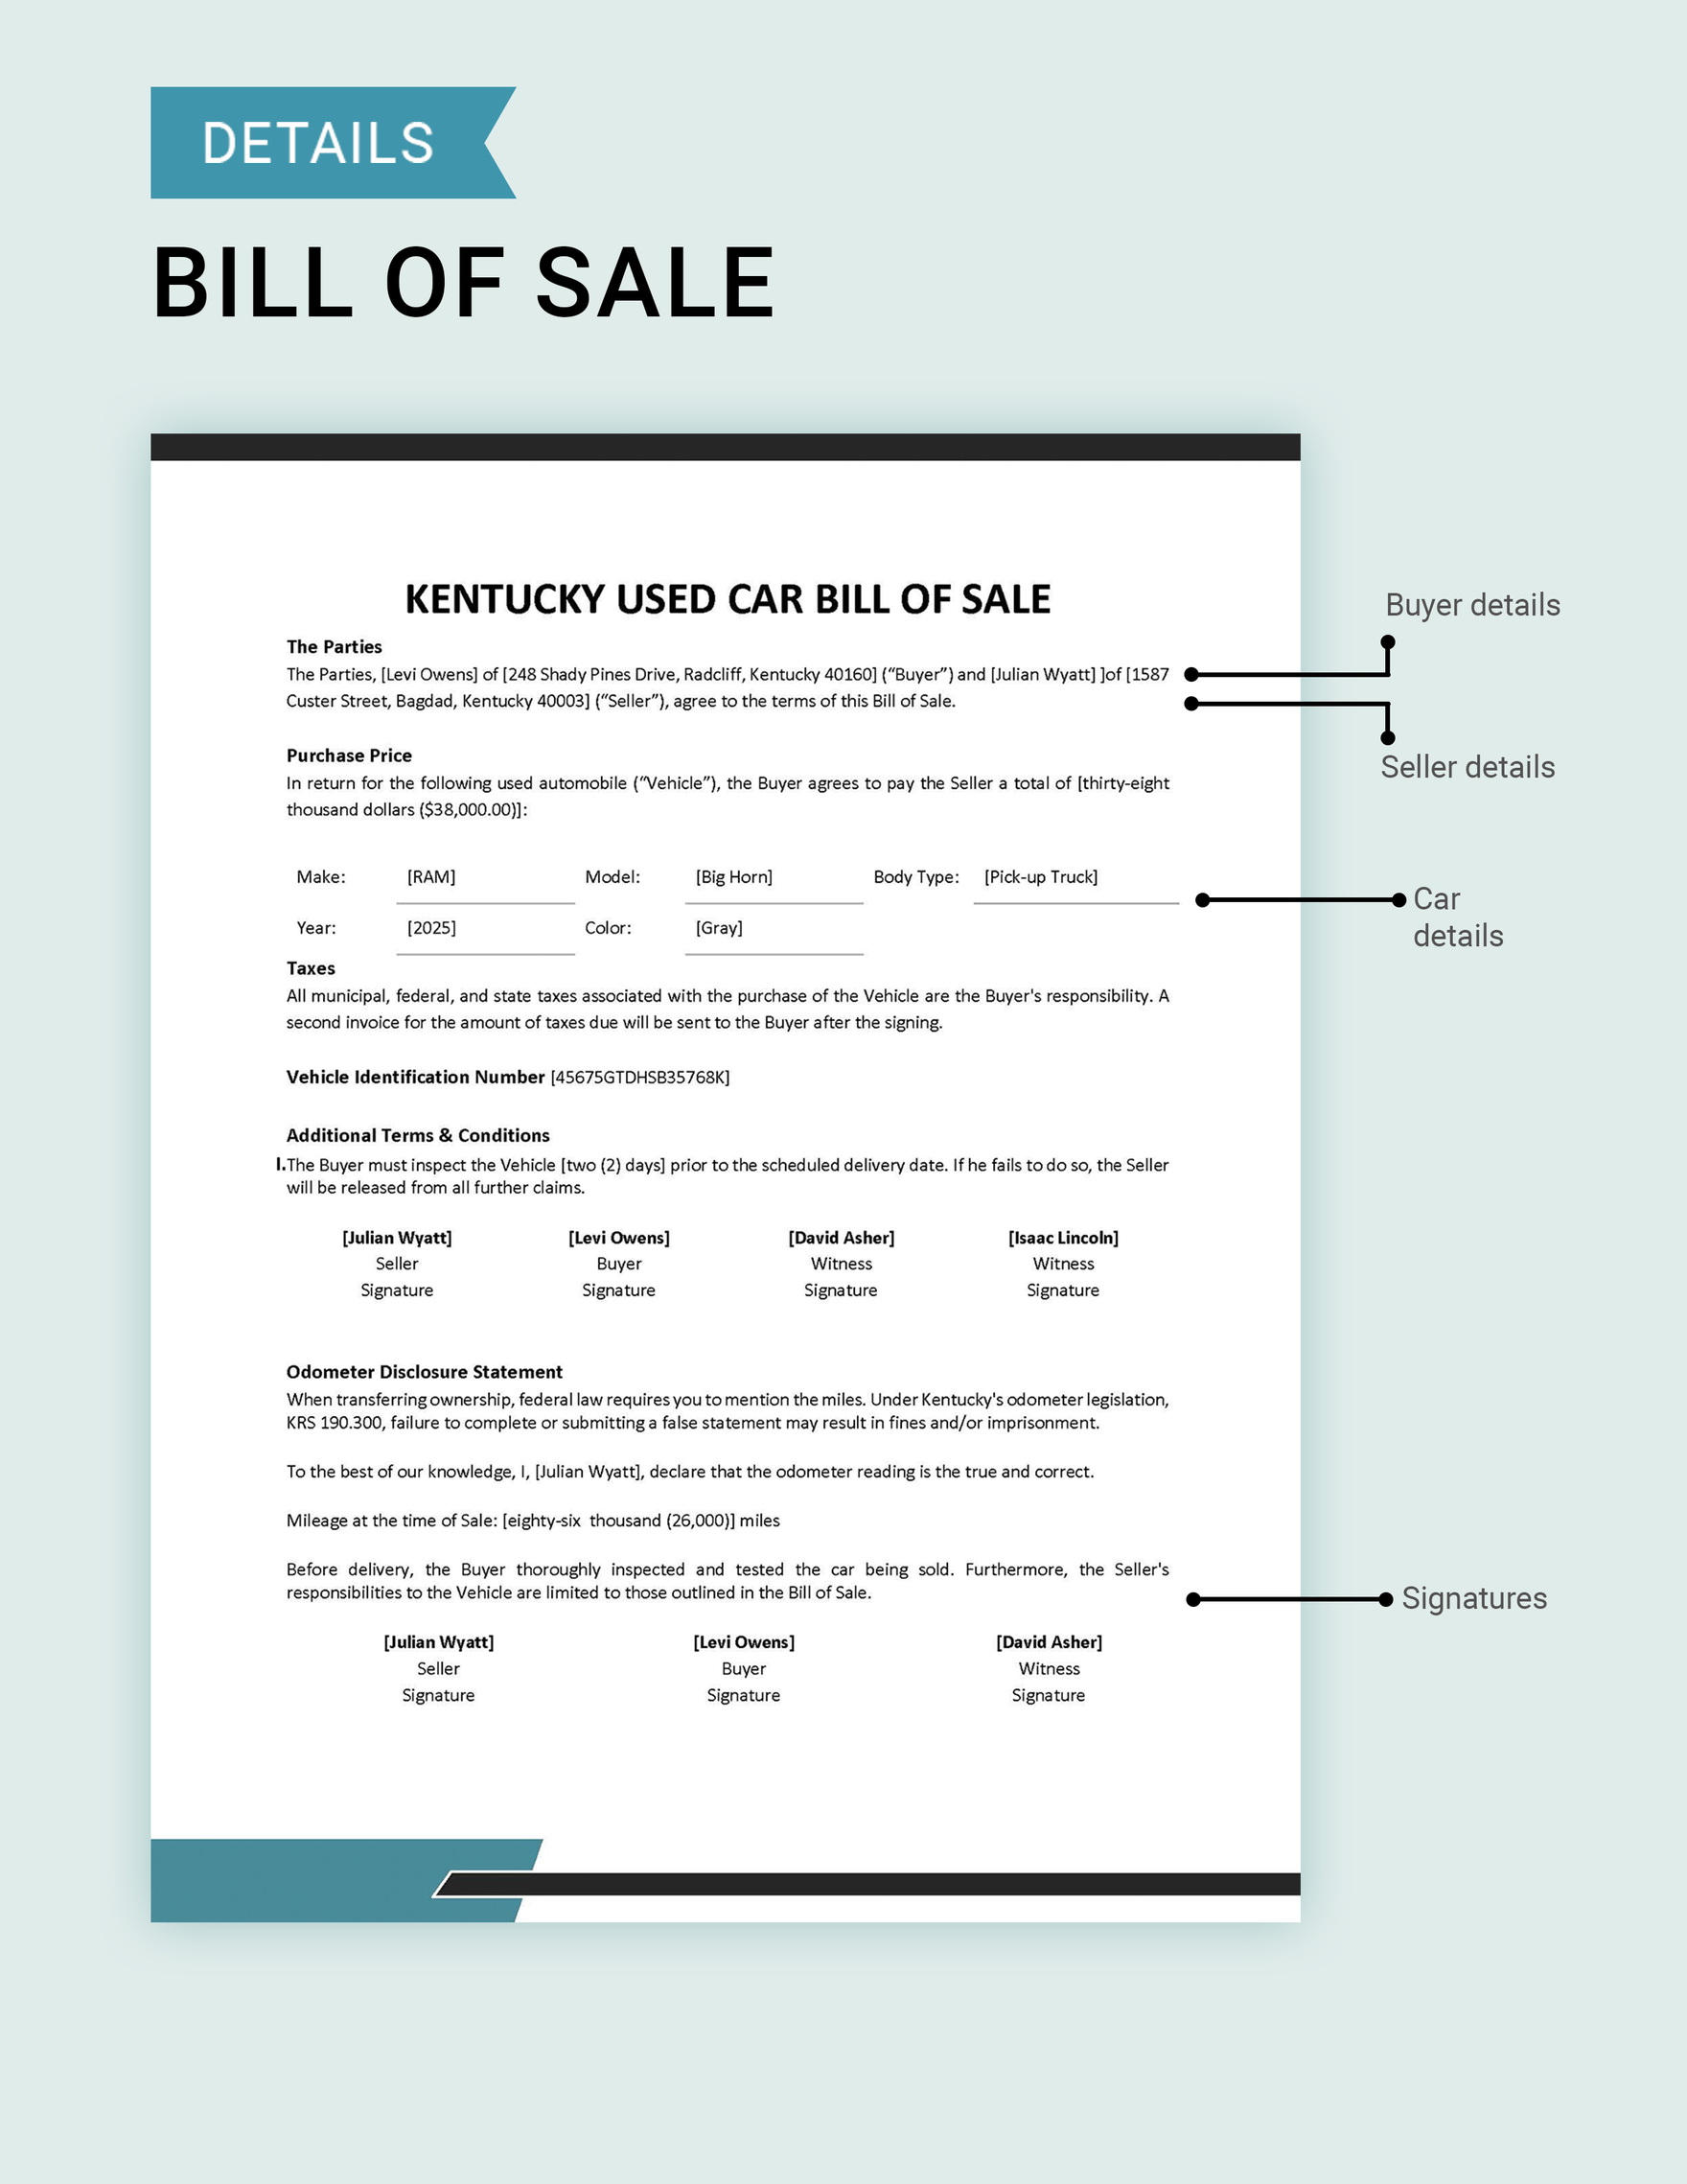 Kentucky Used Car Bill of Sale Template